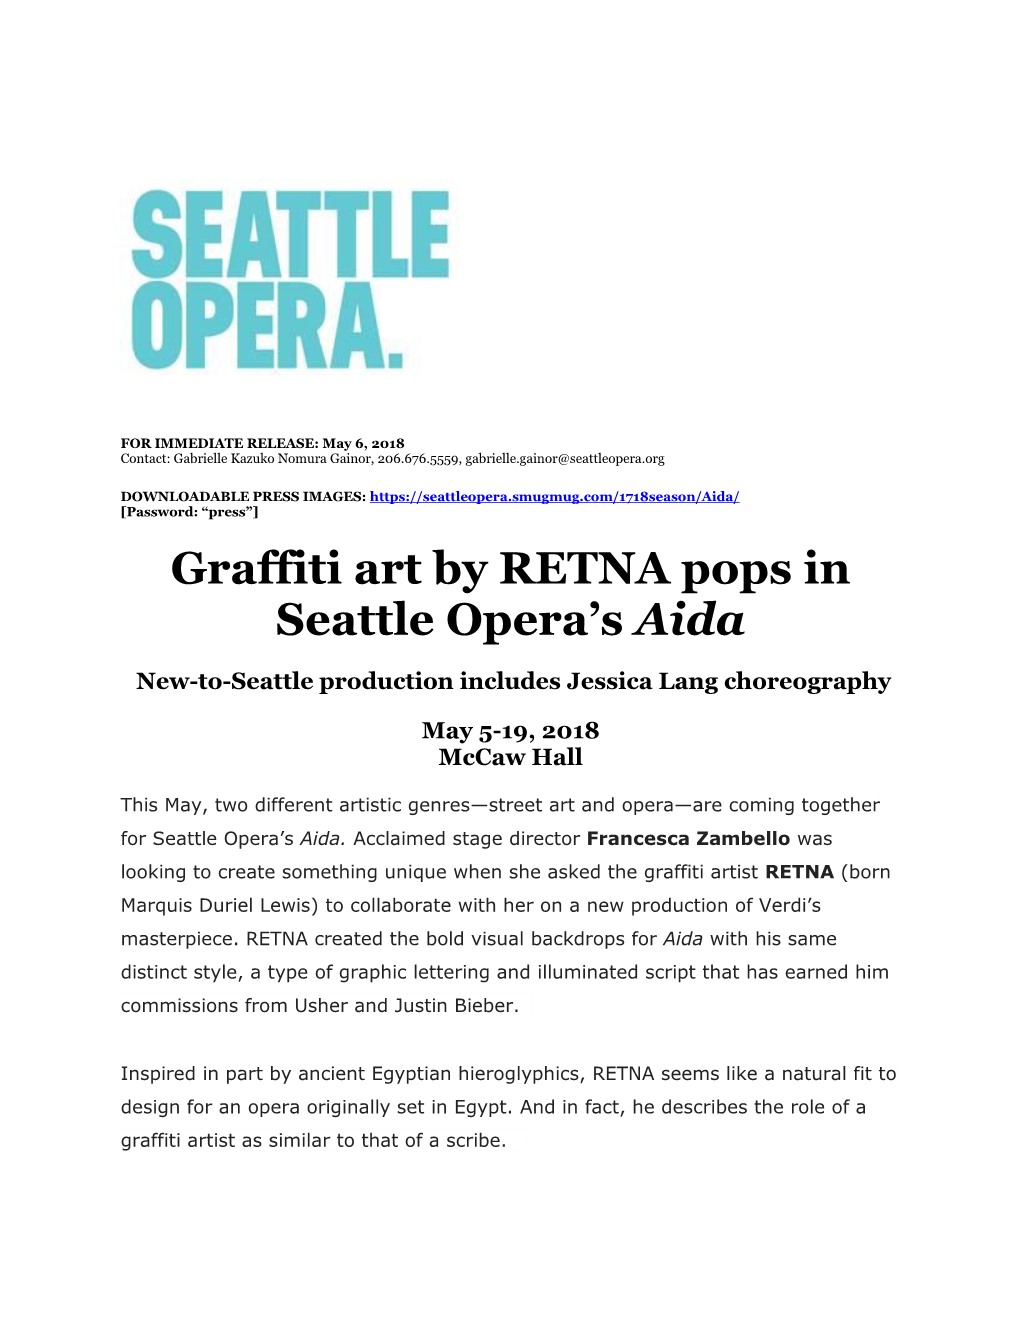 Graffiti Art by RETNA Pops in Seattle Opera's Aida